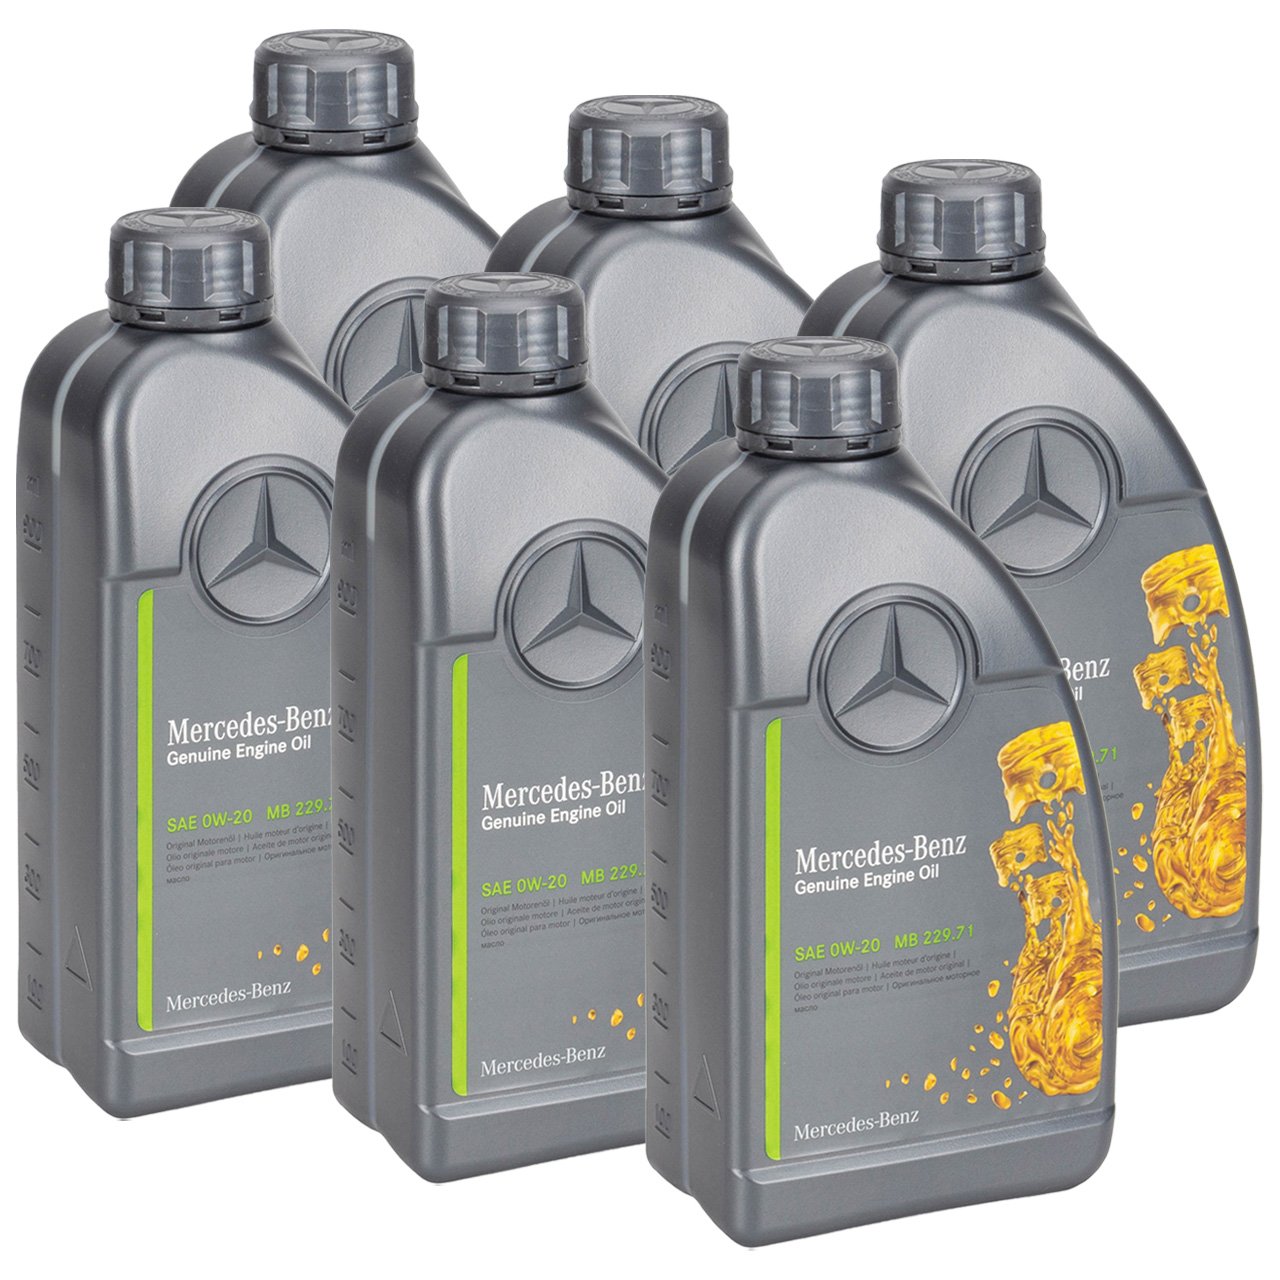 6L 6 Liter ORIGINAL Mercedes-Benz Motoröl Öl 0W-20 MB 229.71 000989870611